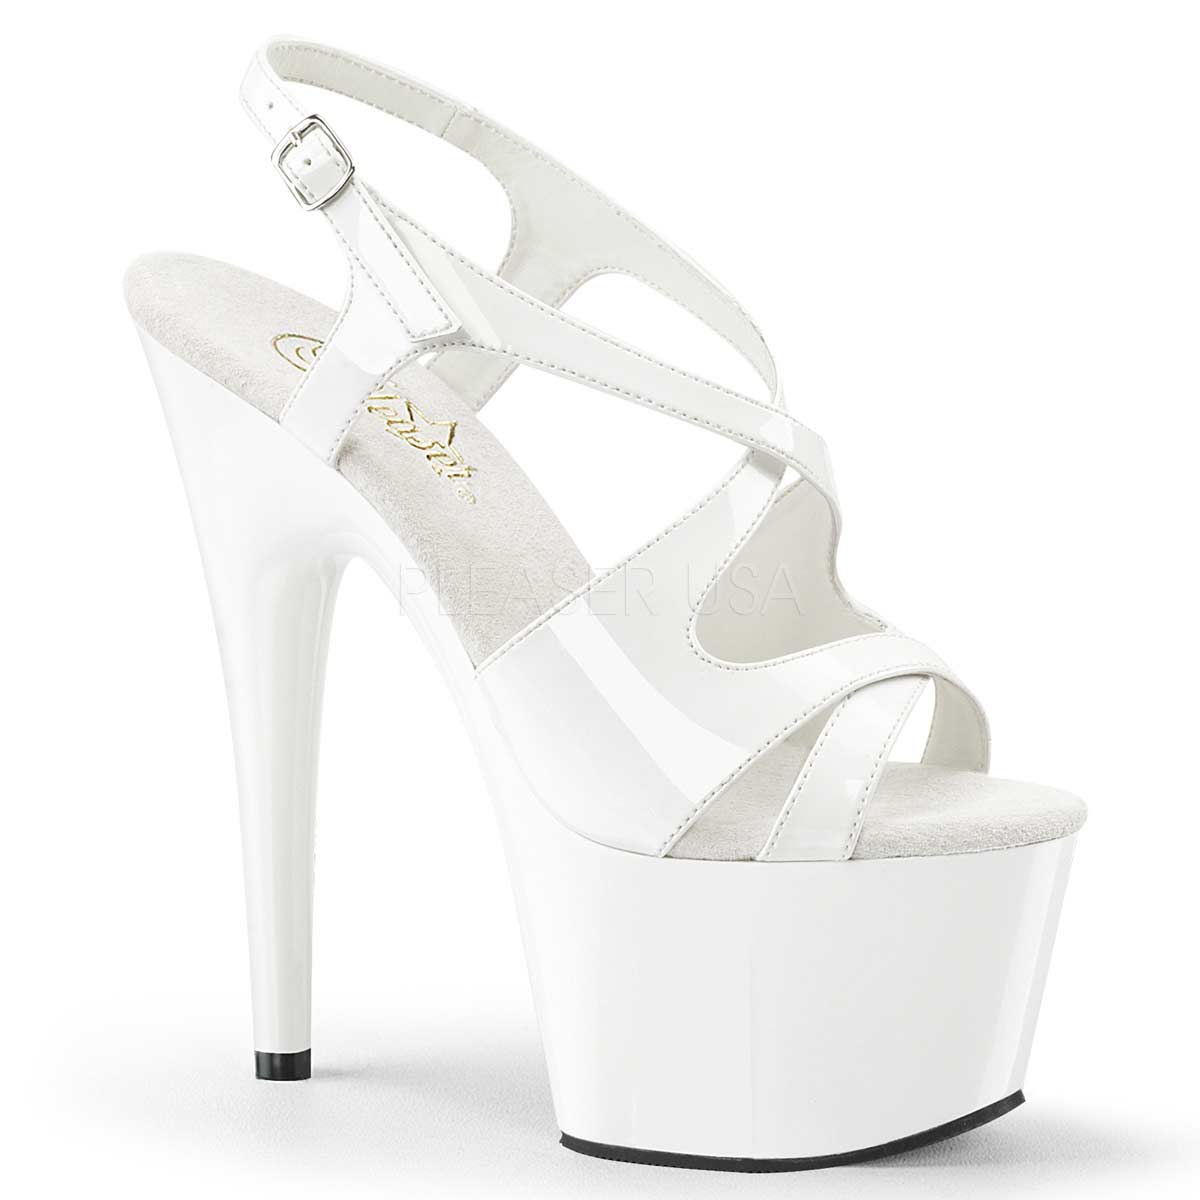 Pleaser Adore-730 - White Pat in Sexy Heels & Platforms - $44.99